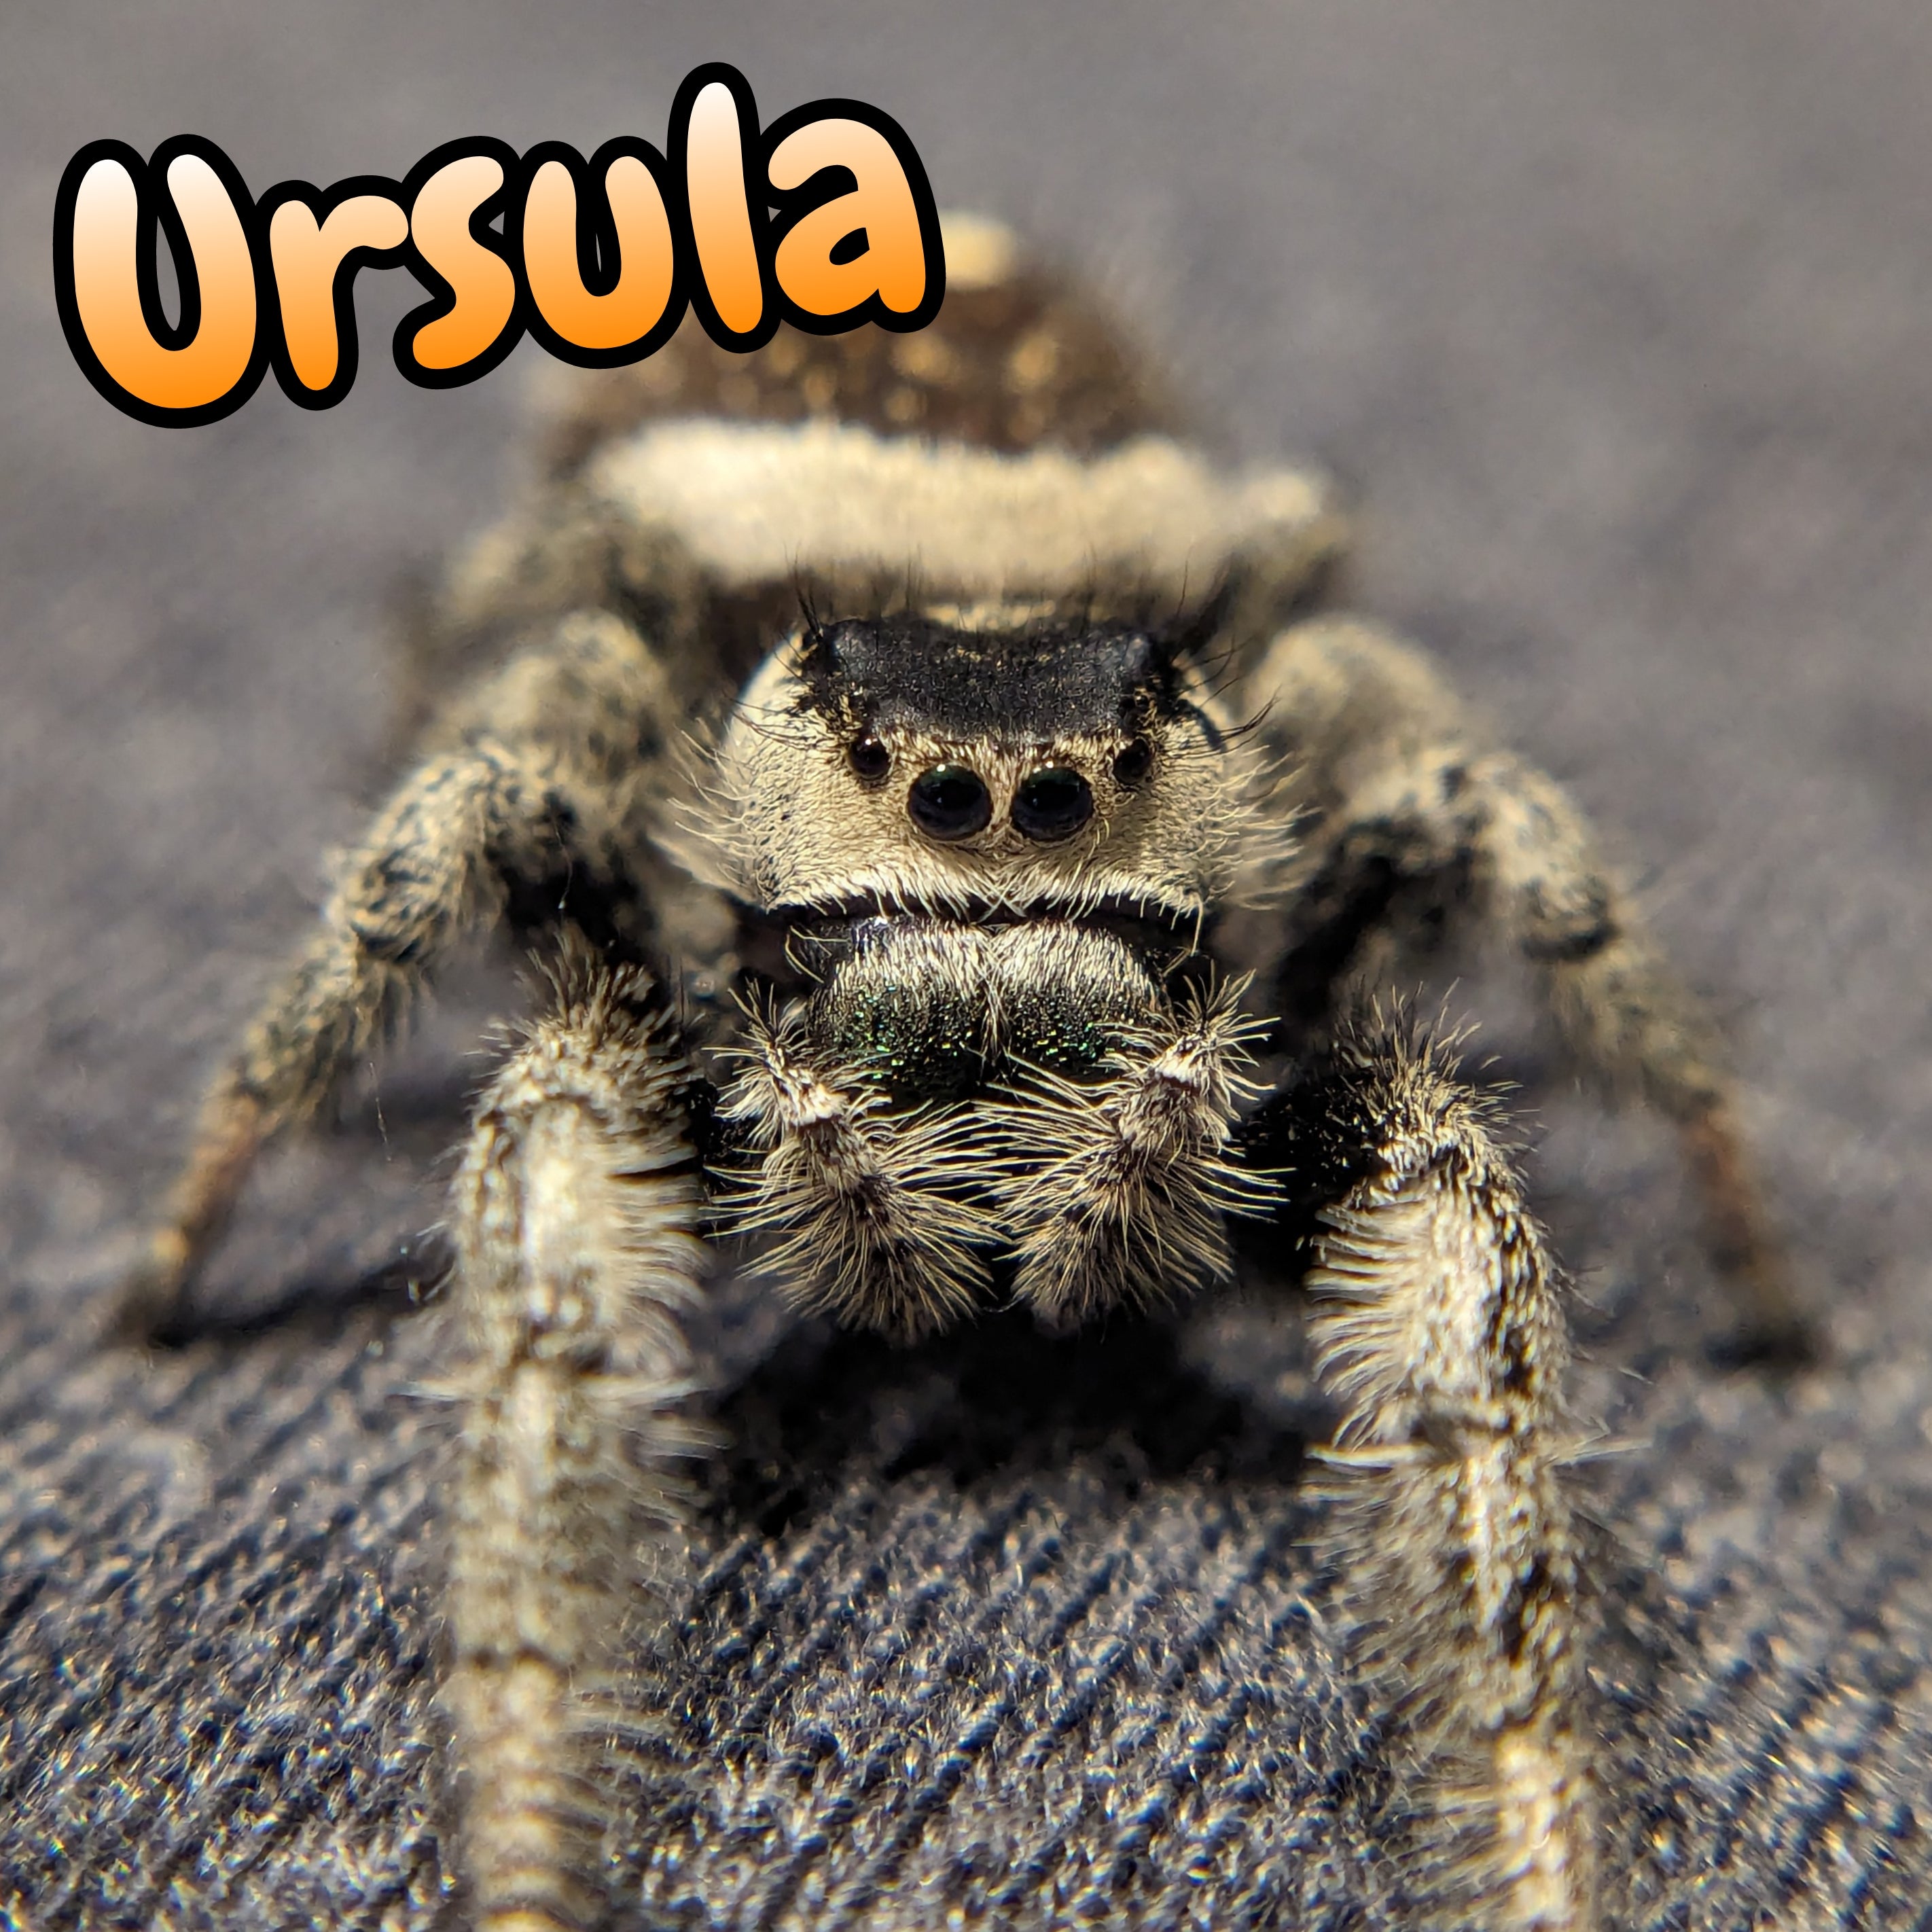 Regal Jumping Spider "Ursula"